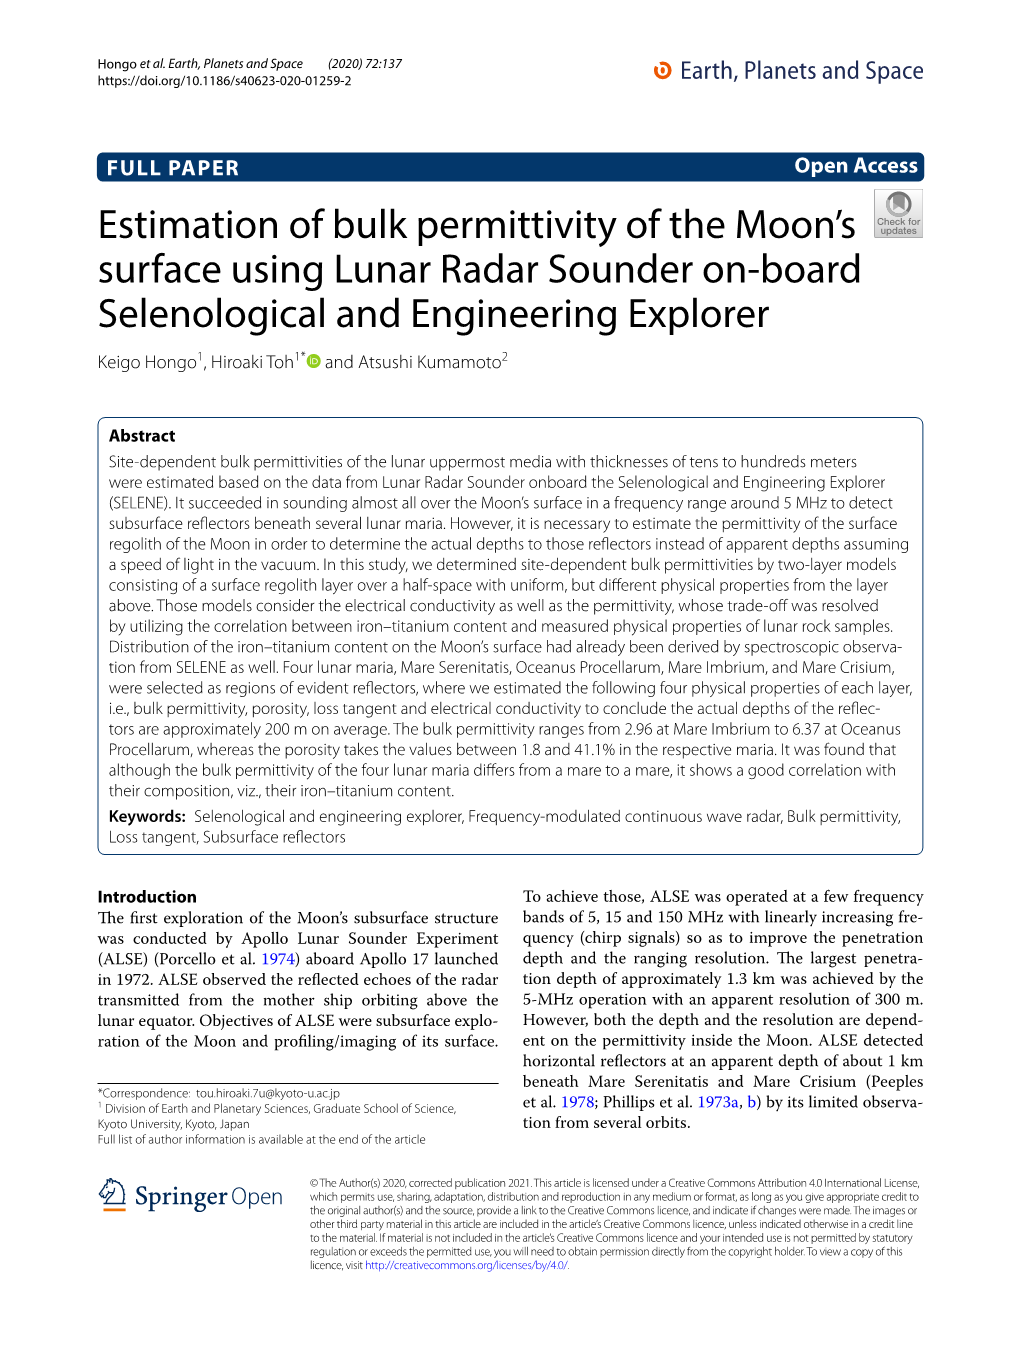 Estimation of Bulk Permittivity of the Moon's